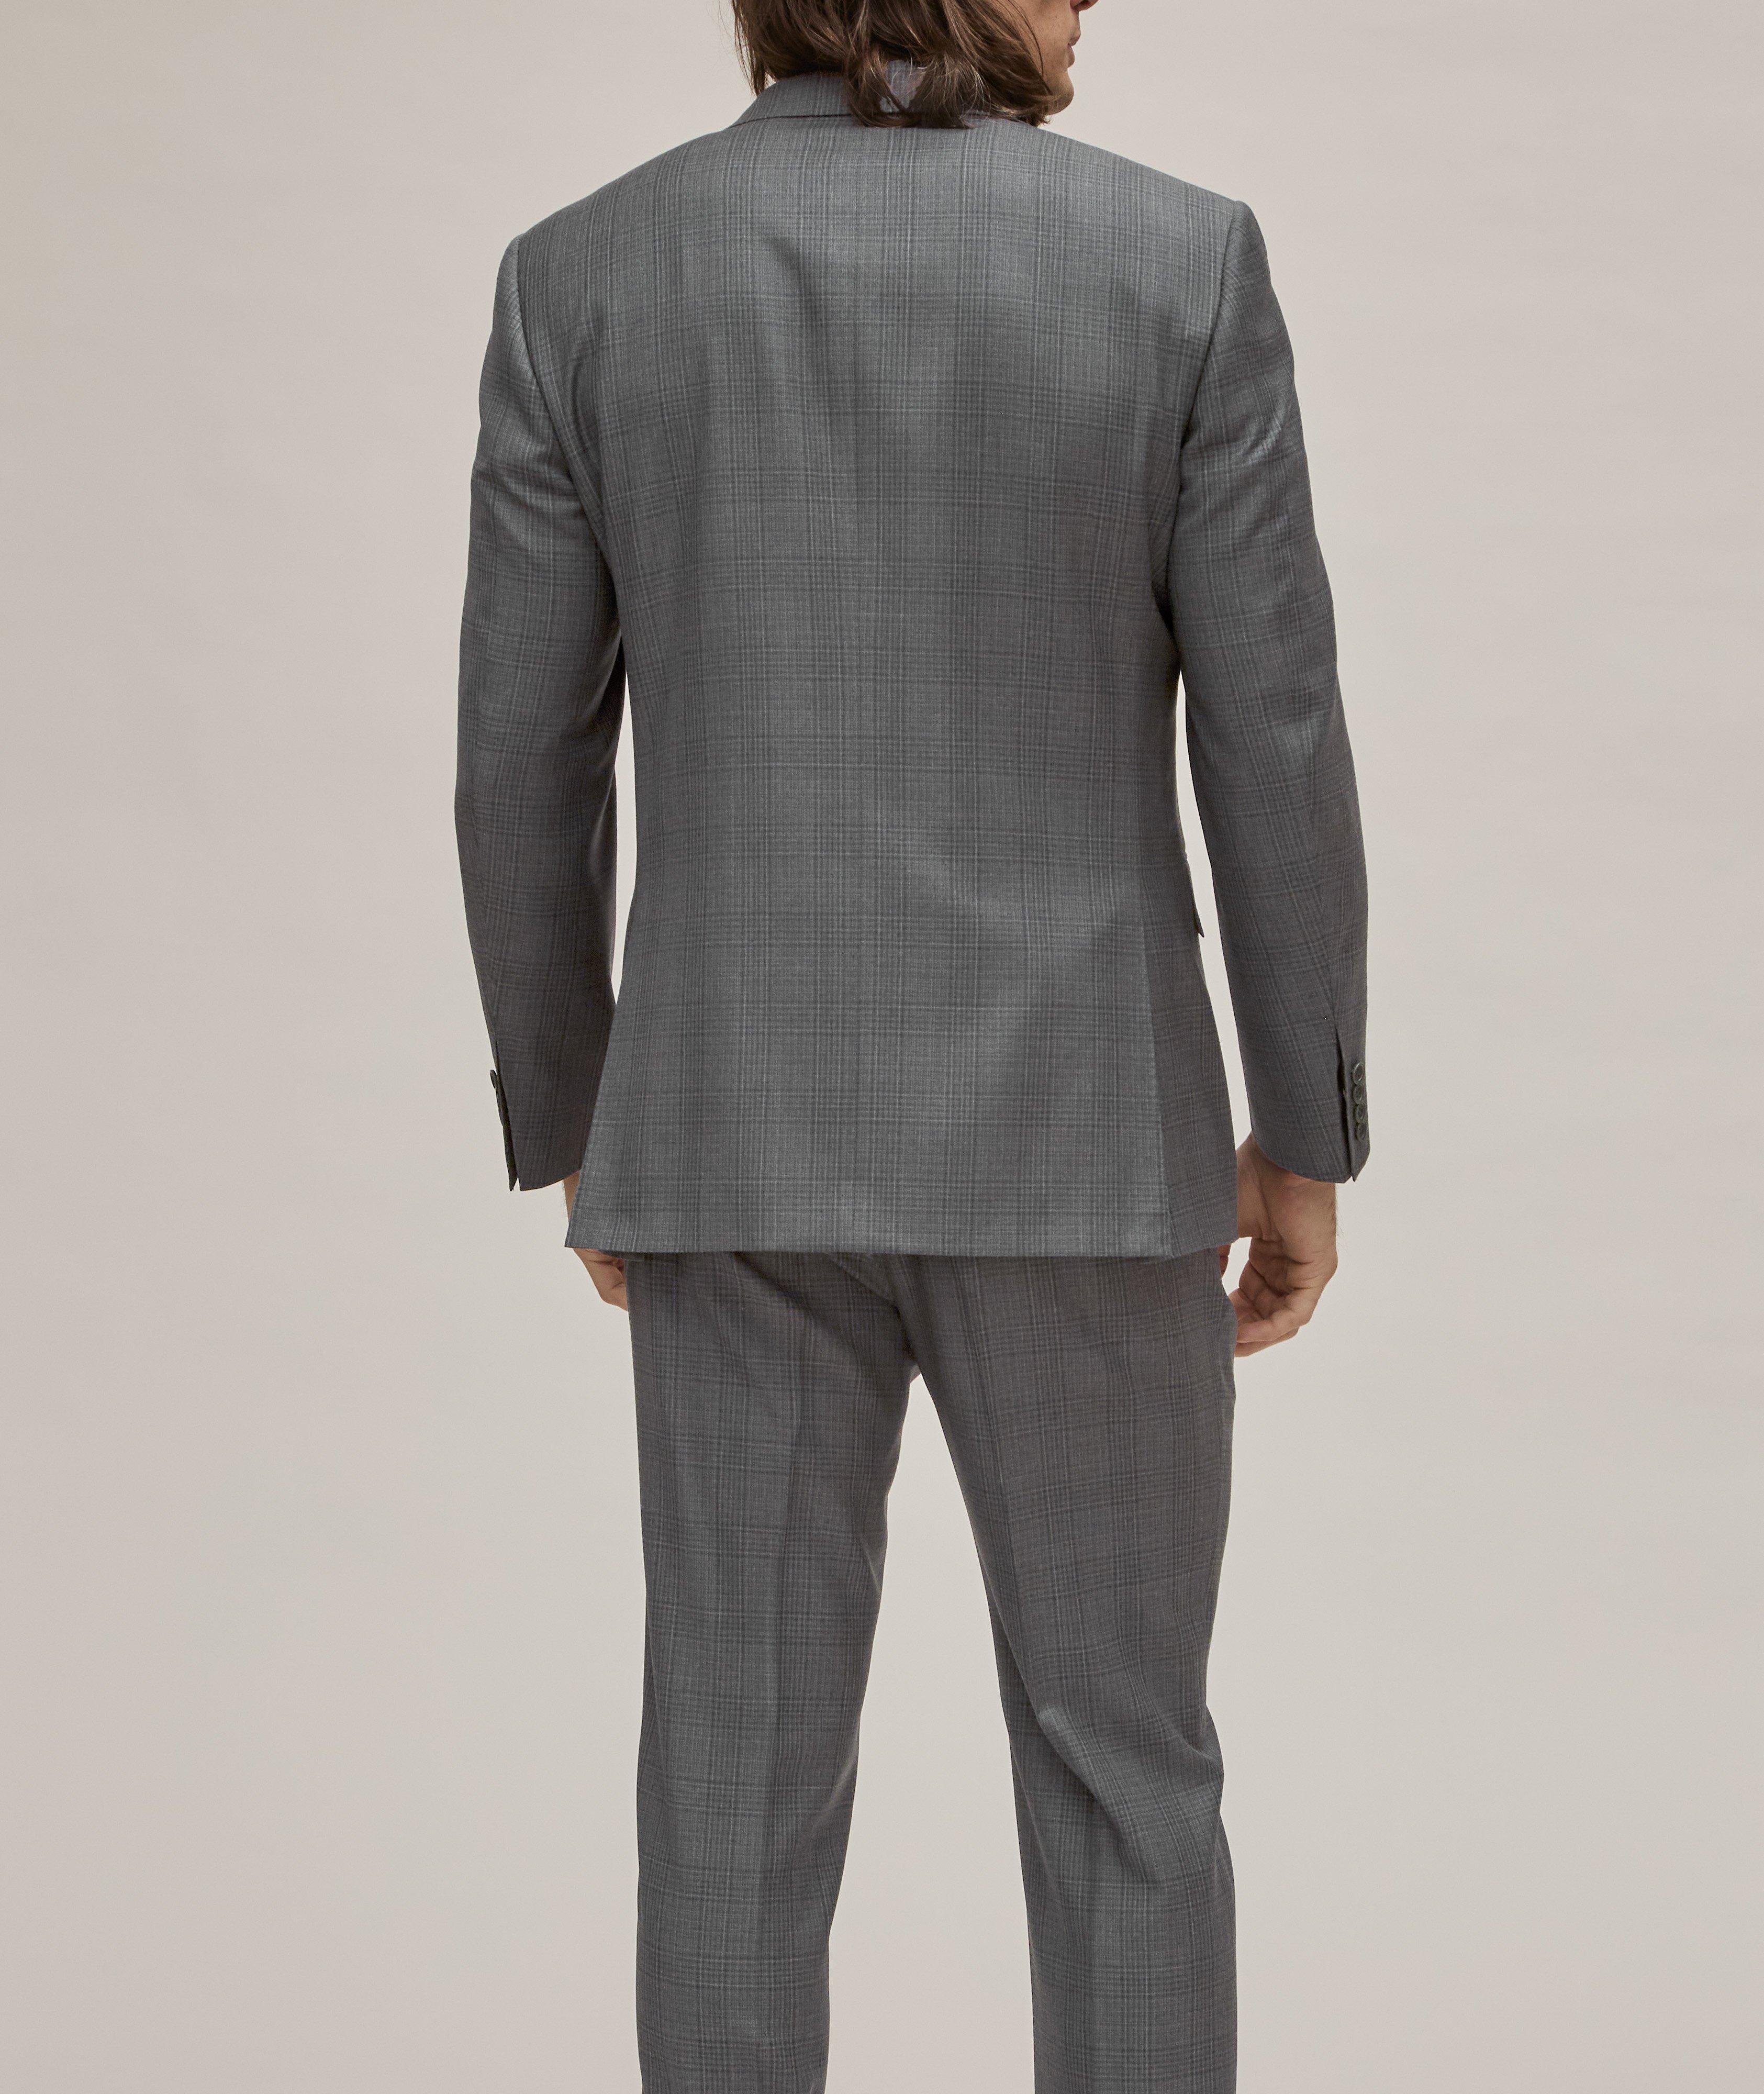 Tonal Glen Check Wool Suit image 2